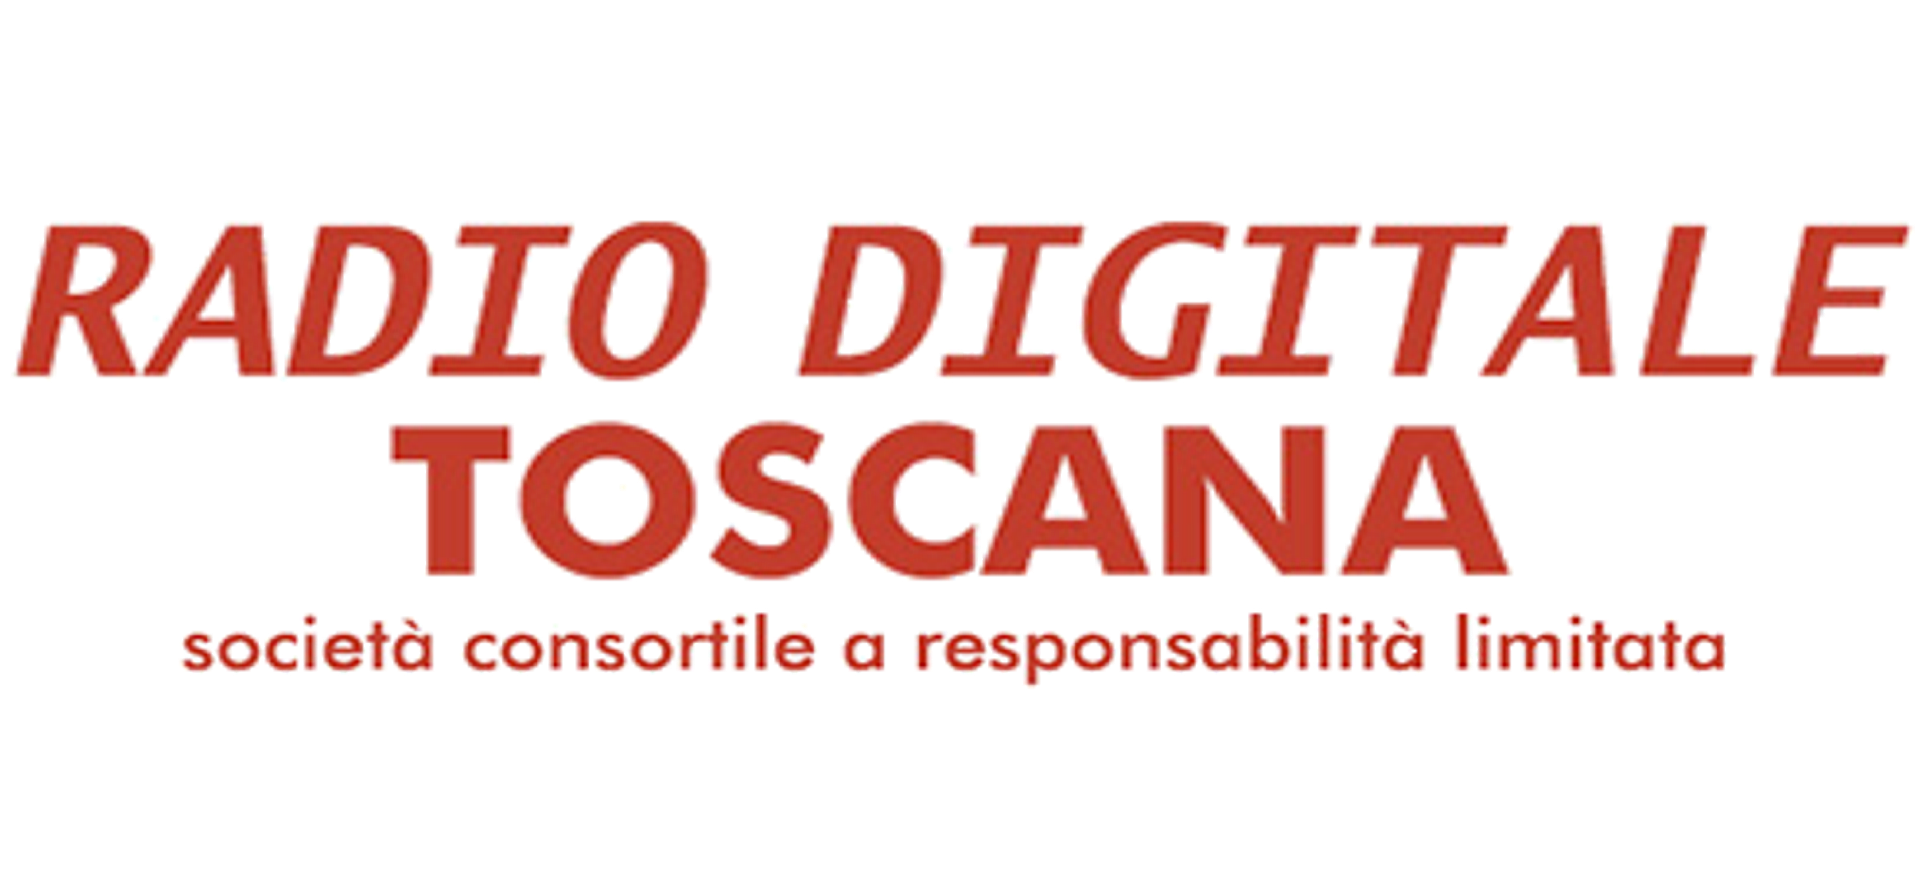 Radio Digitale Toscana